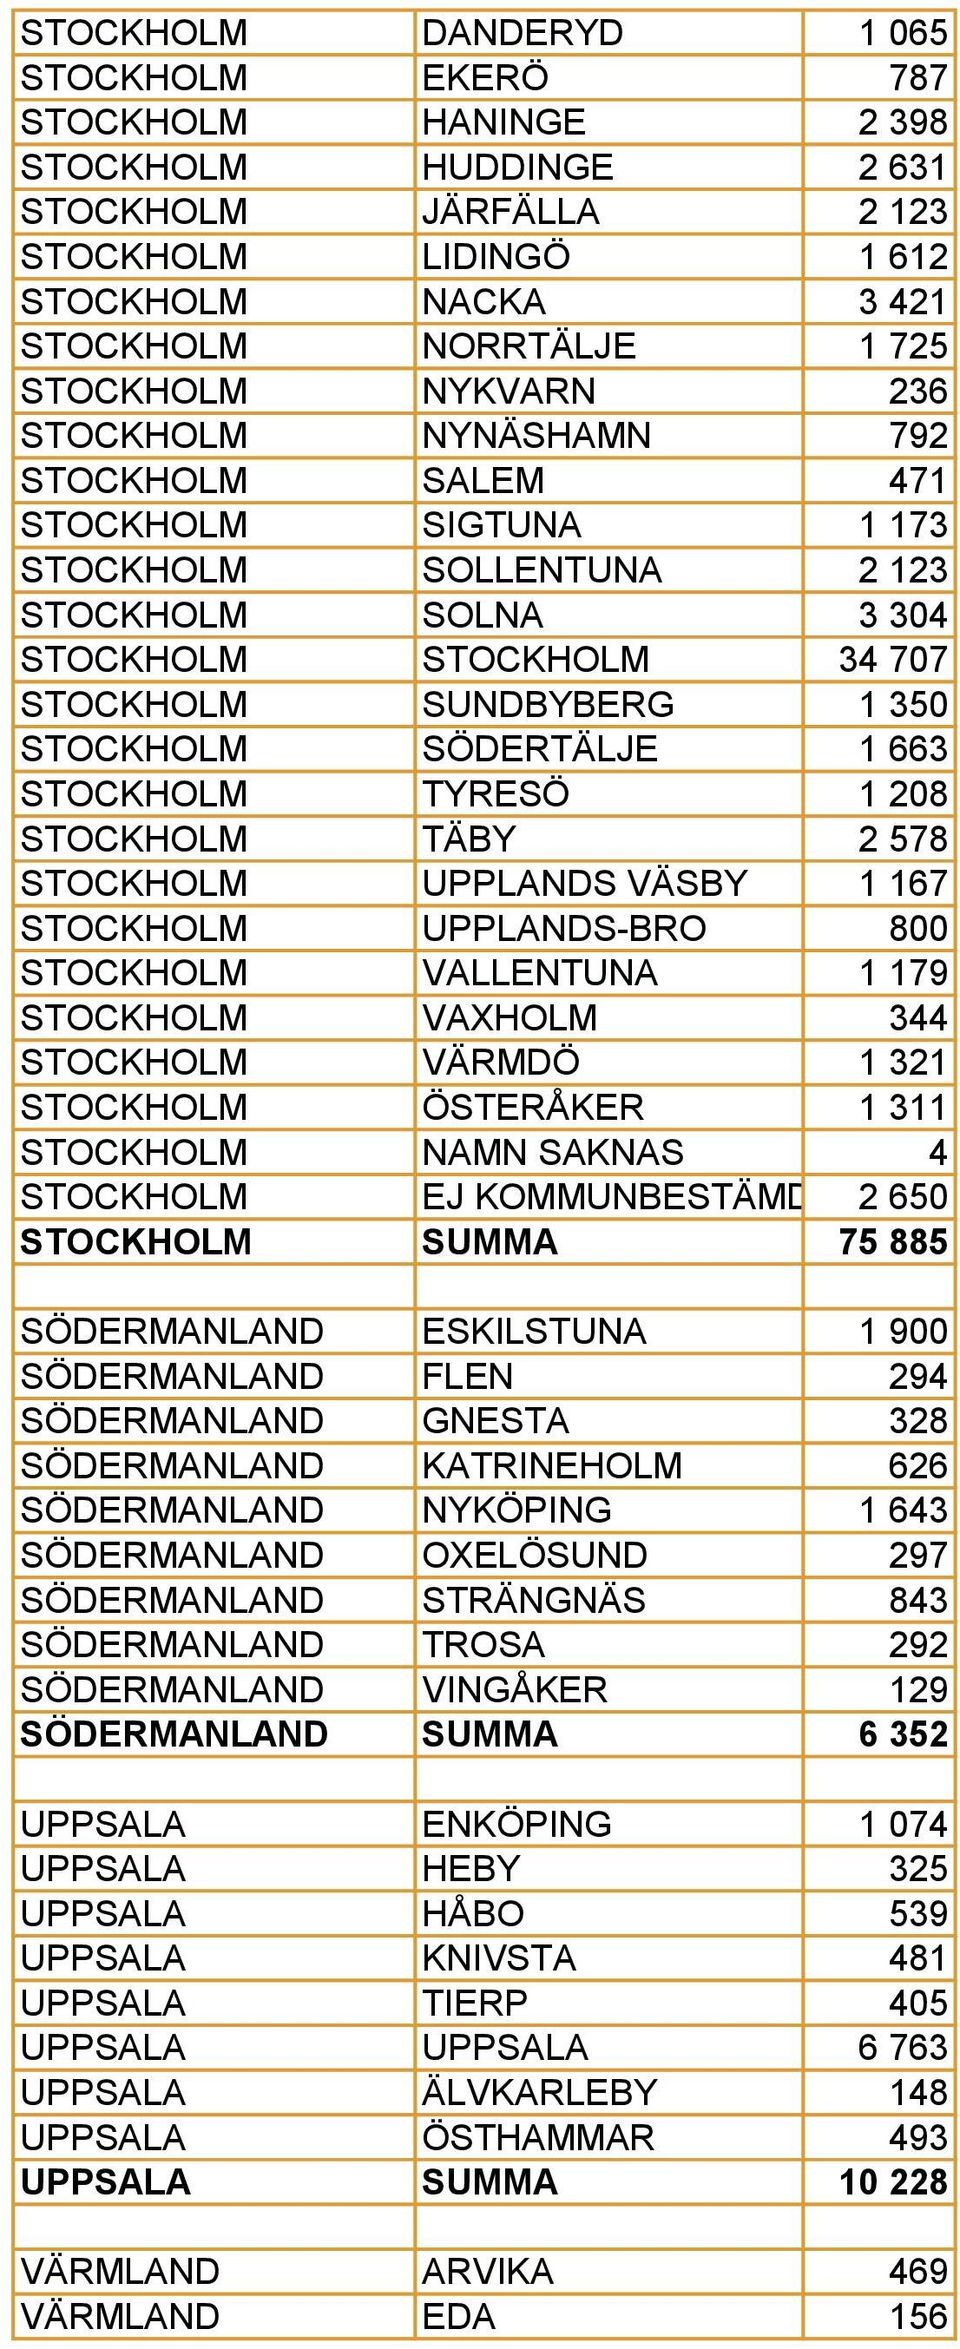 STOCKHOLM SÖDERTÄLJE 1 663 STOCKHOLM TYRESÖ 1 208 STOCKHOLM TÄBY 2 578 STOCKHOLM UPPLANDS VÄSBY 1 167 STOCKHOLM UPPLANDS-BRO 800 STOCKHOLM VALLENTUNA 1 179 STOCKHOLM VAXHOLM 344 STOCKHOLM VÄRMDÖ 1